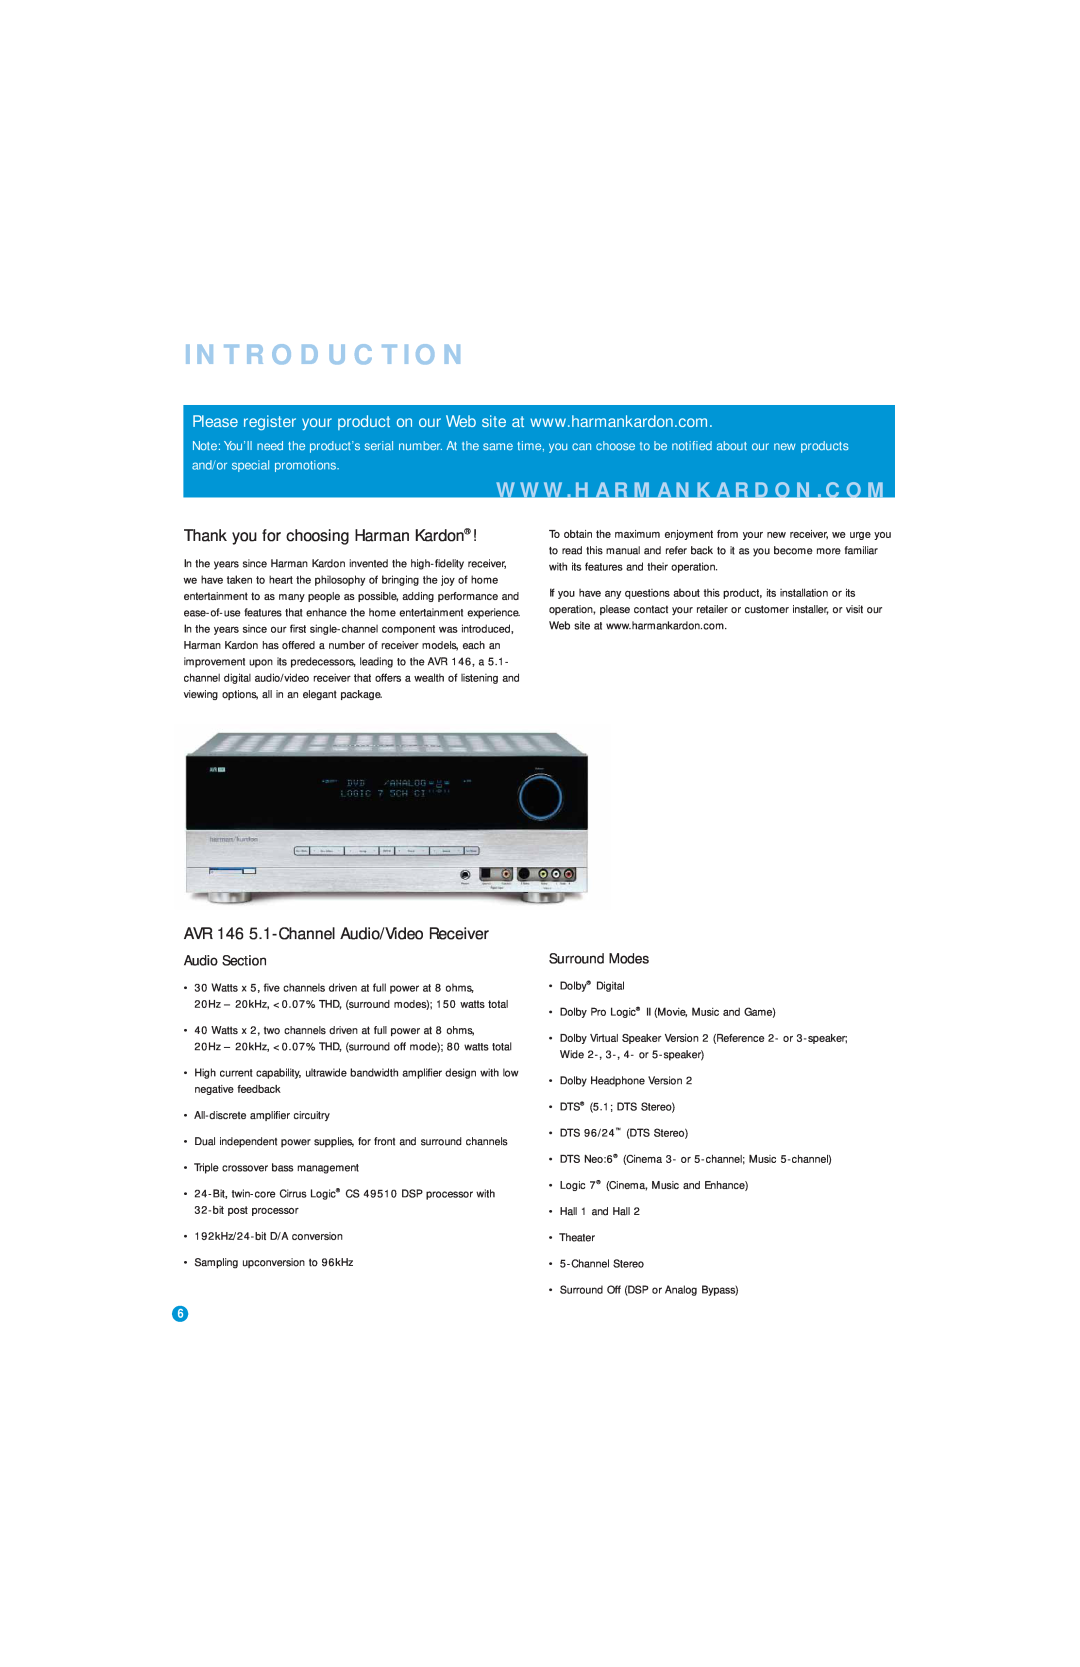 Harman-Kardon owner manual Introduction, Thank you for choosing Harman Kardon, AVR 146 5.1-ChannelAudio/Video Receiver 